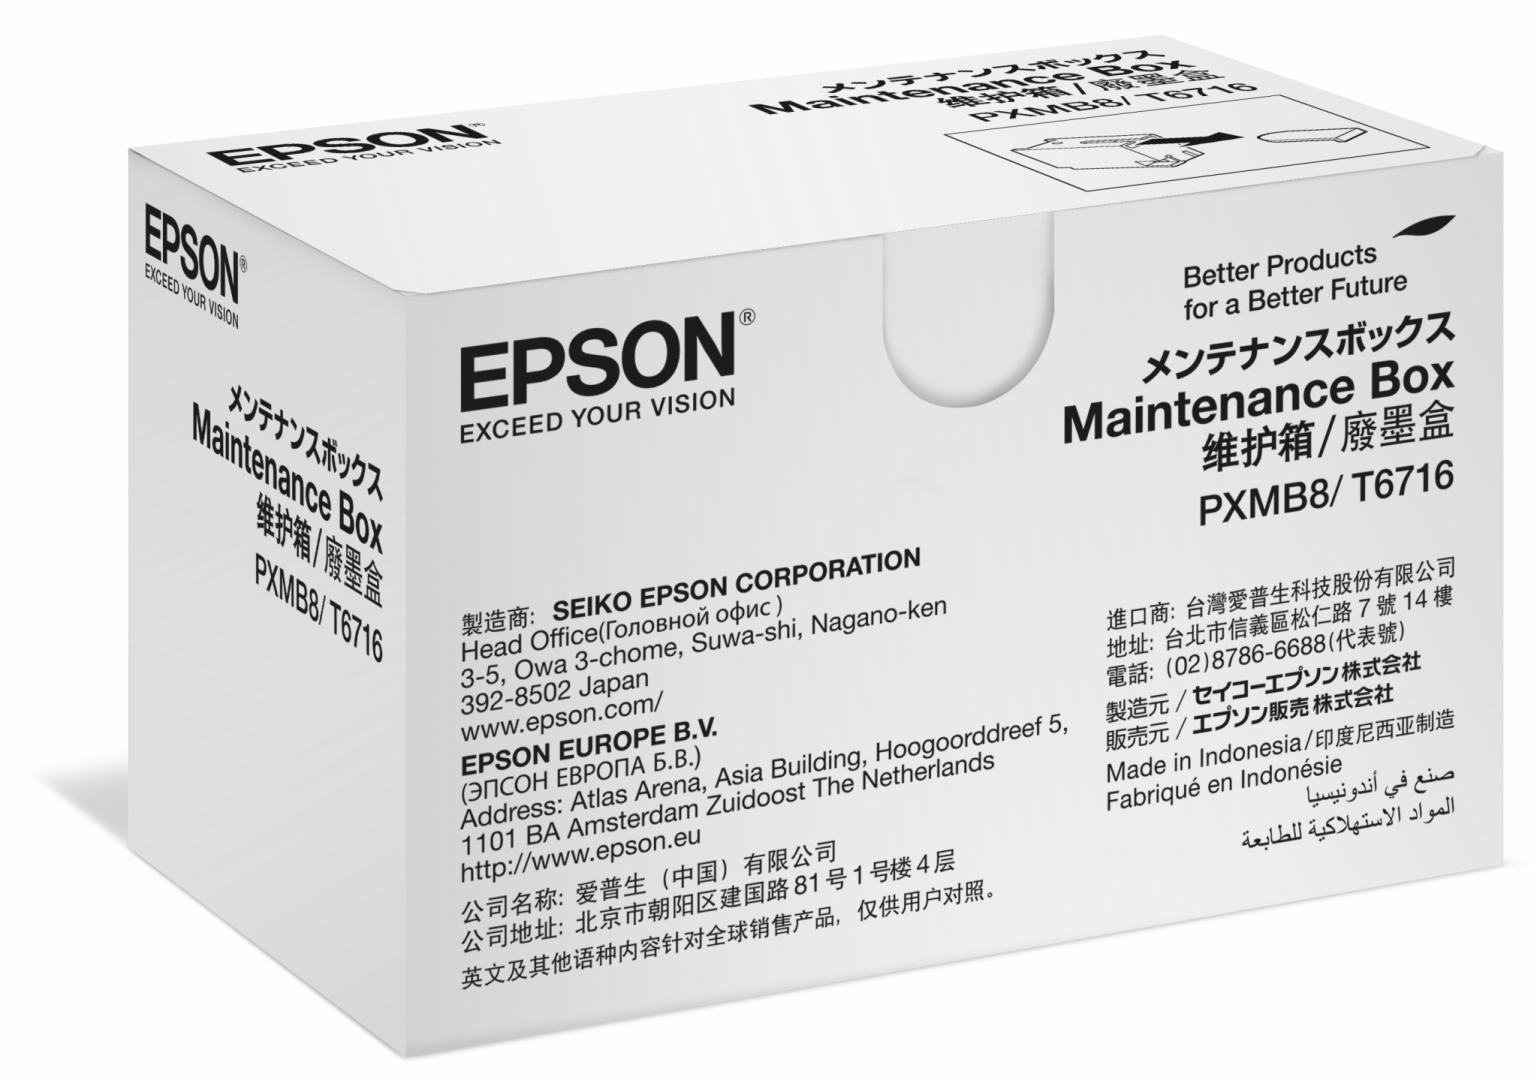 Maintenence box Epson T6717 pentru WF-C5210DW, WF-5290DW, WF-C5710DWF, WF-C5790DWF, WF-M5299DW, WF-M5799DWF.